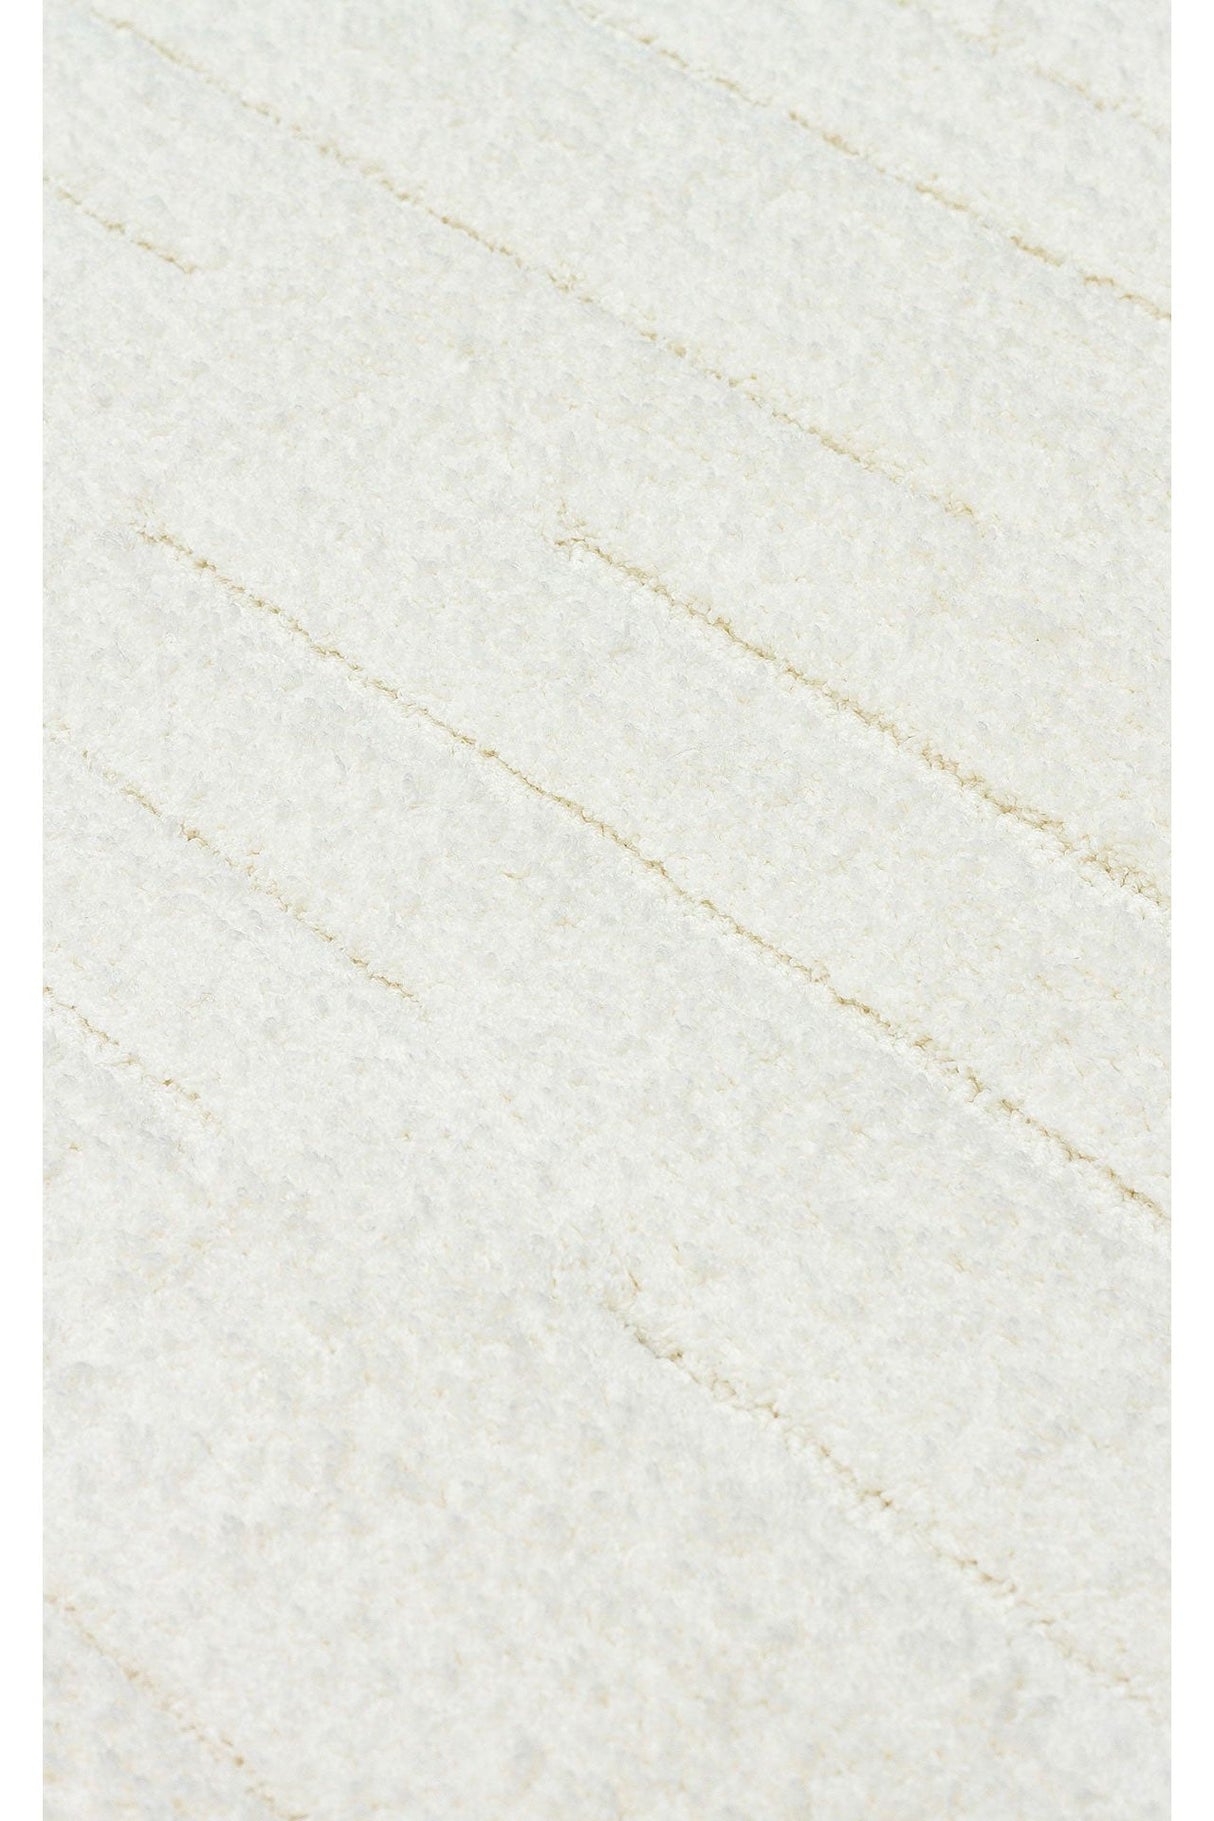 #Turkish_Carpets_Rugs# #Modern_Carpets# #Abrash_Carpets#Msr 05 White